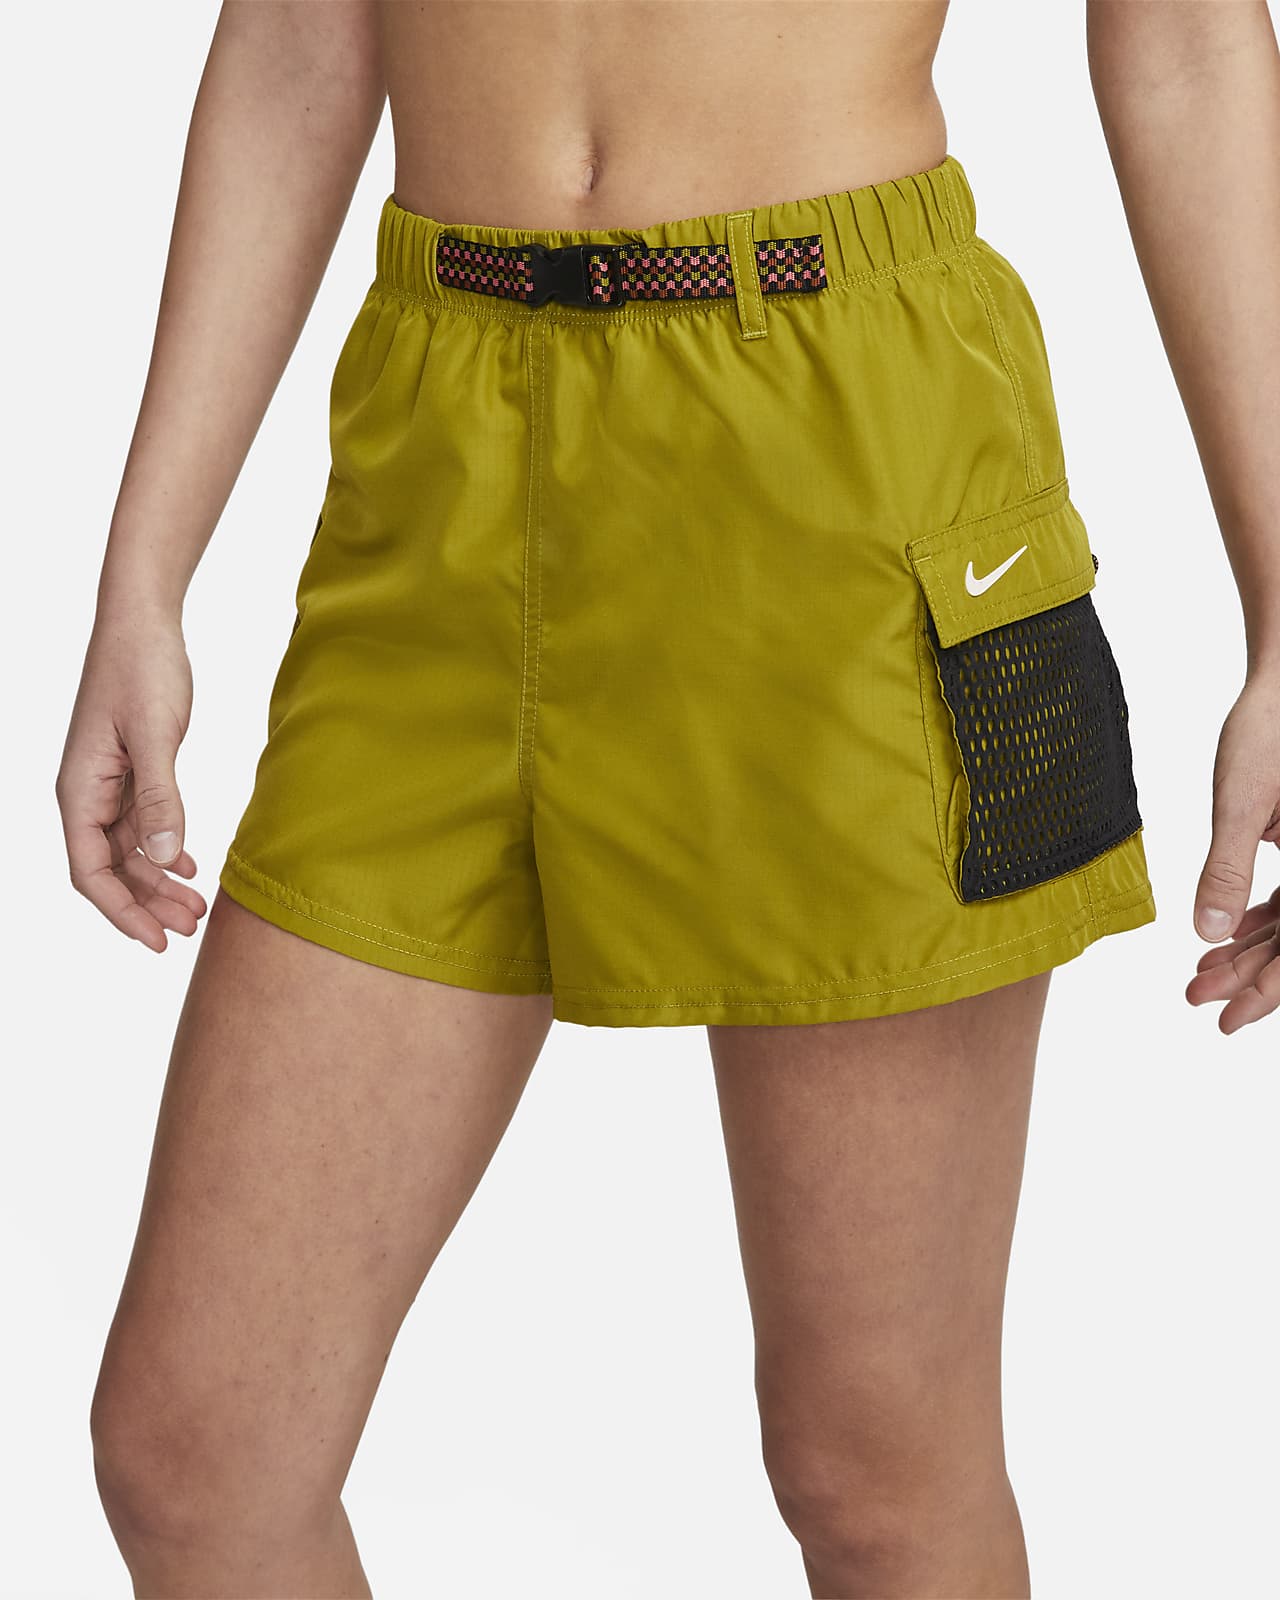 Under Armour Nike Womens Smocked Nylon Athletic Shorts Gray Yellow Siz -  Shop Linda's Stuff